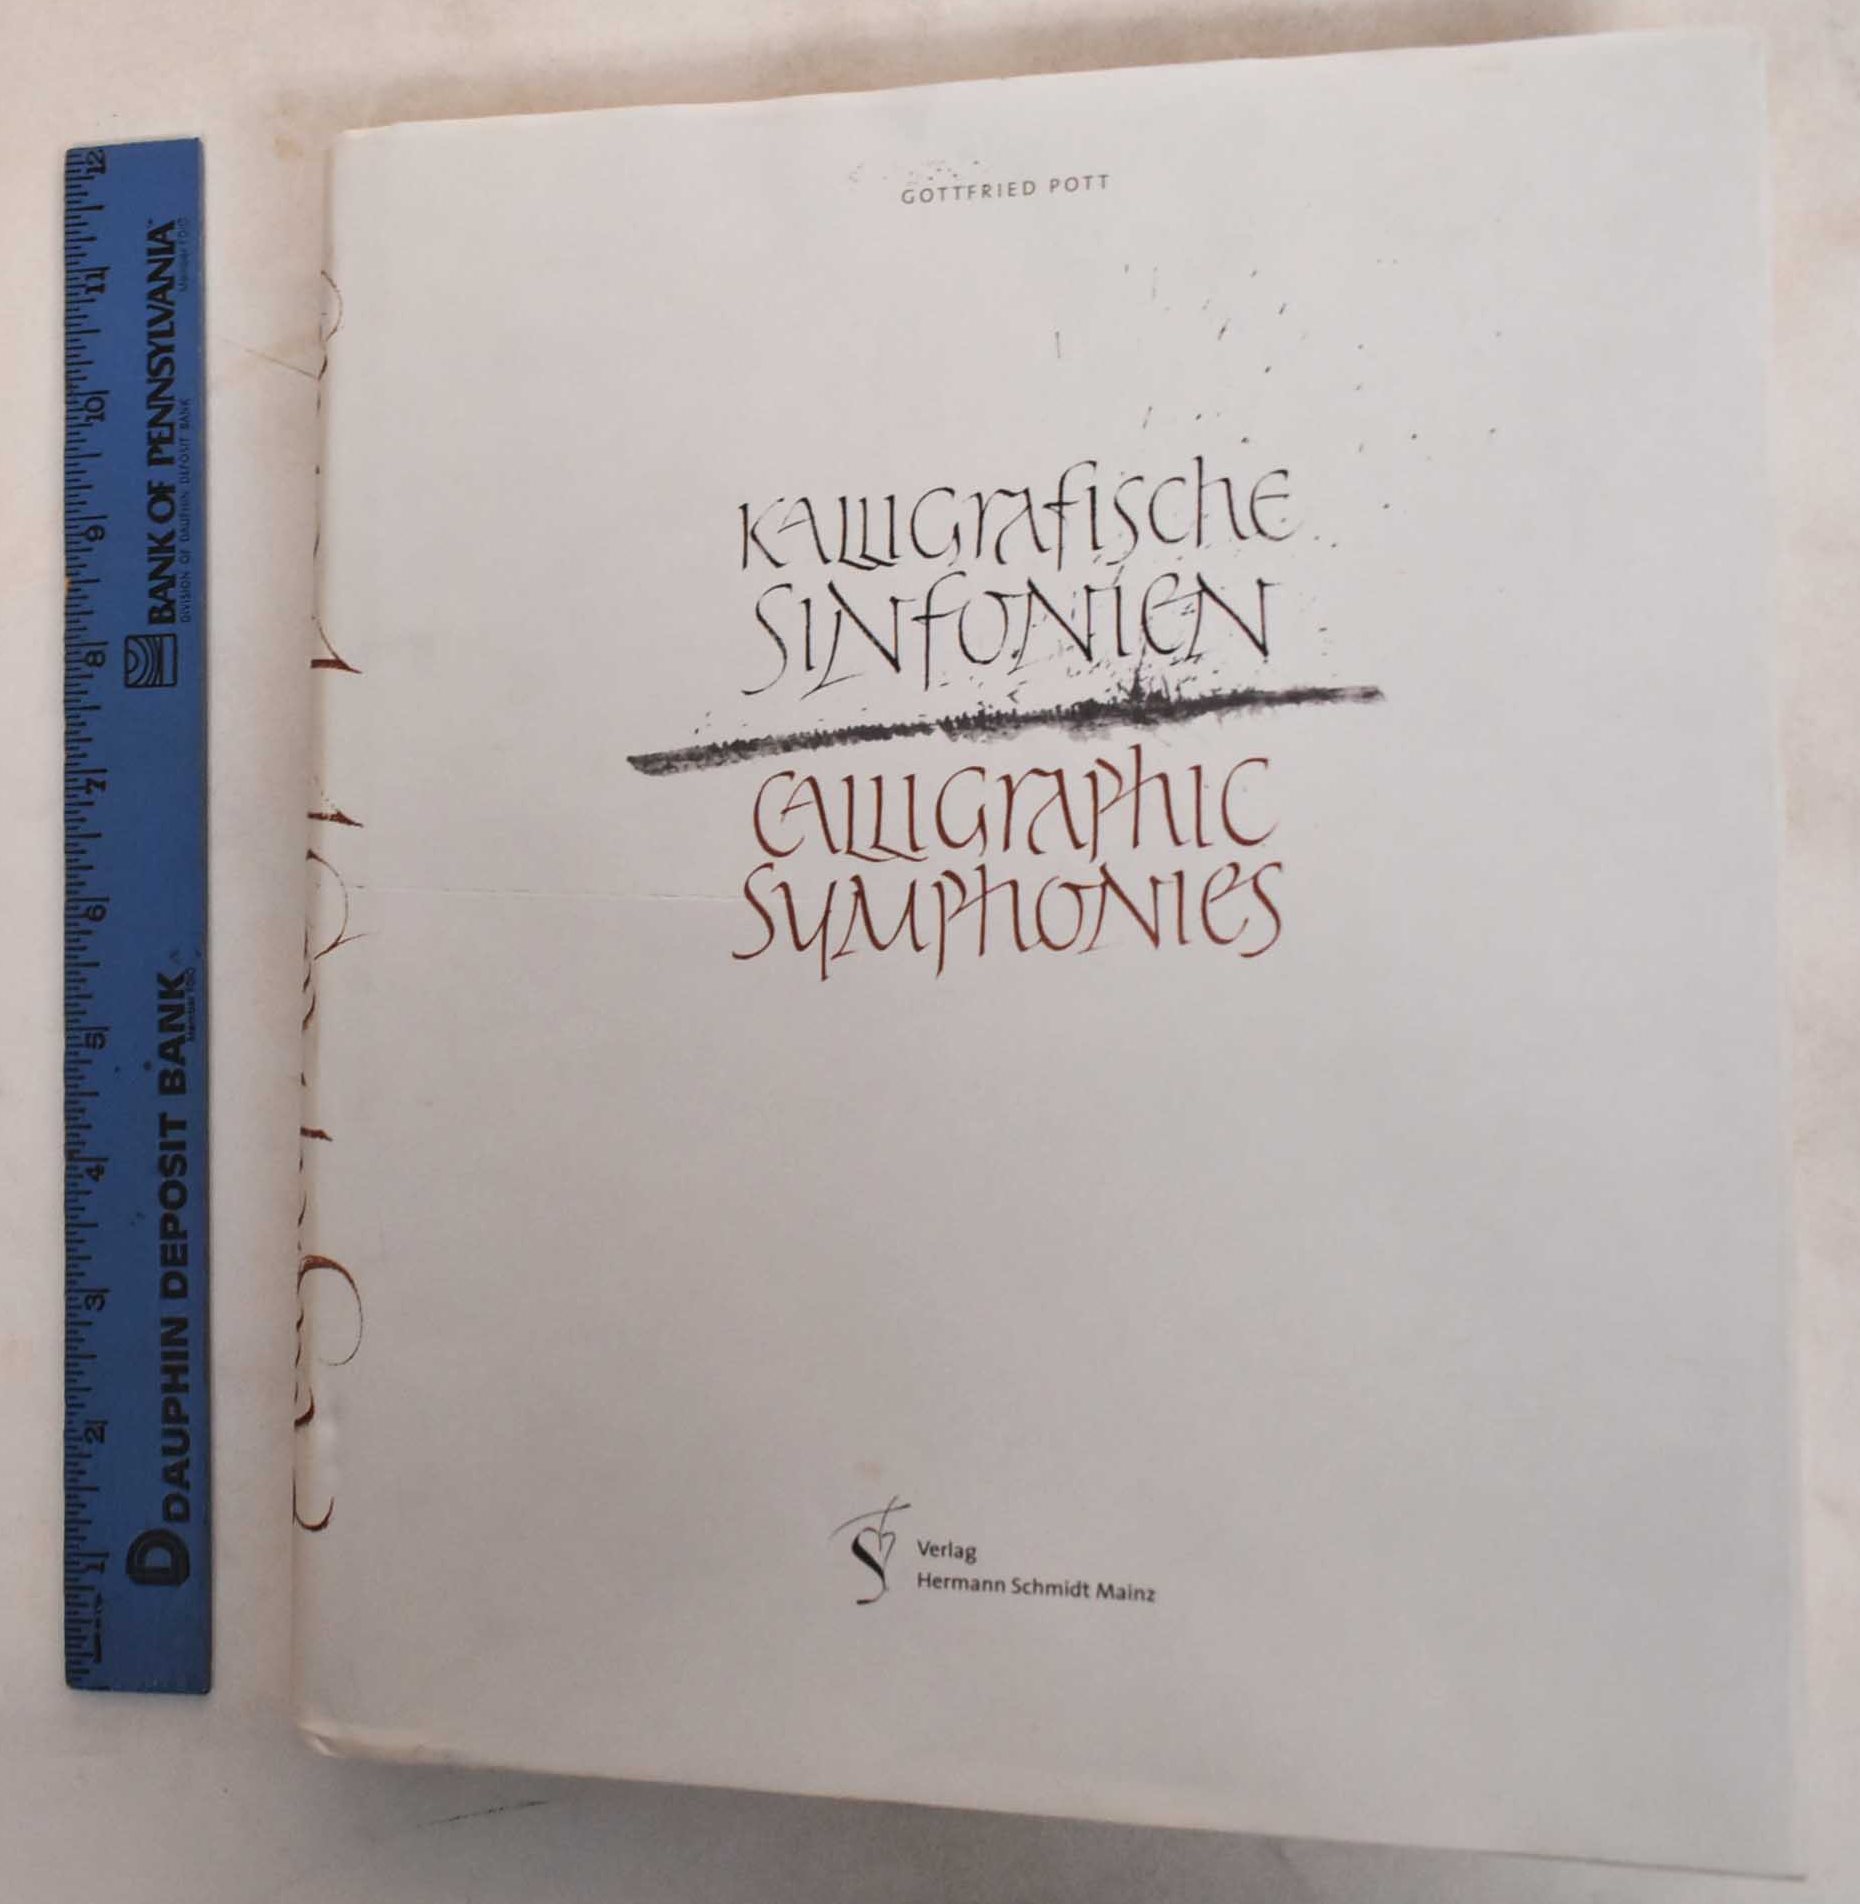 Kalligrafische Sinfonien = Calligraphic symphonnies - Pott, Gottfried